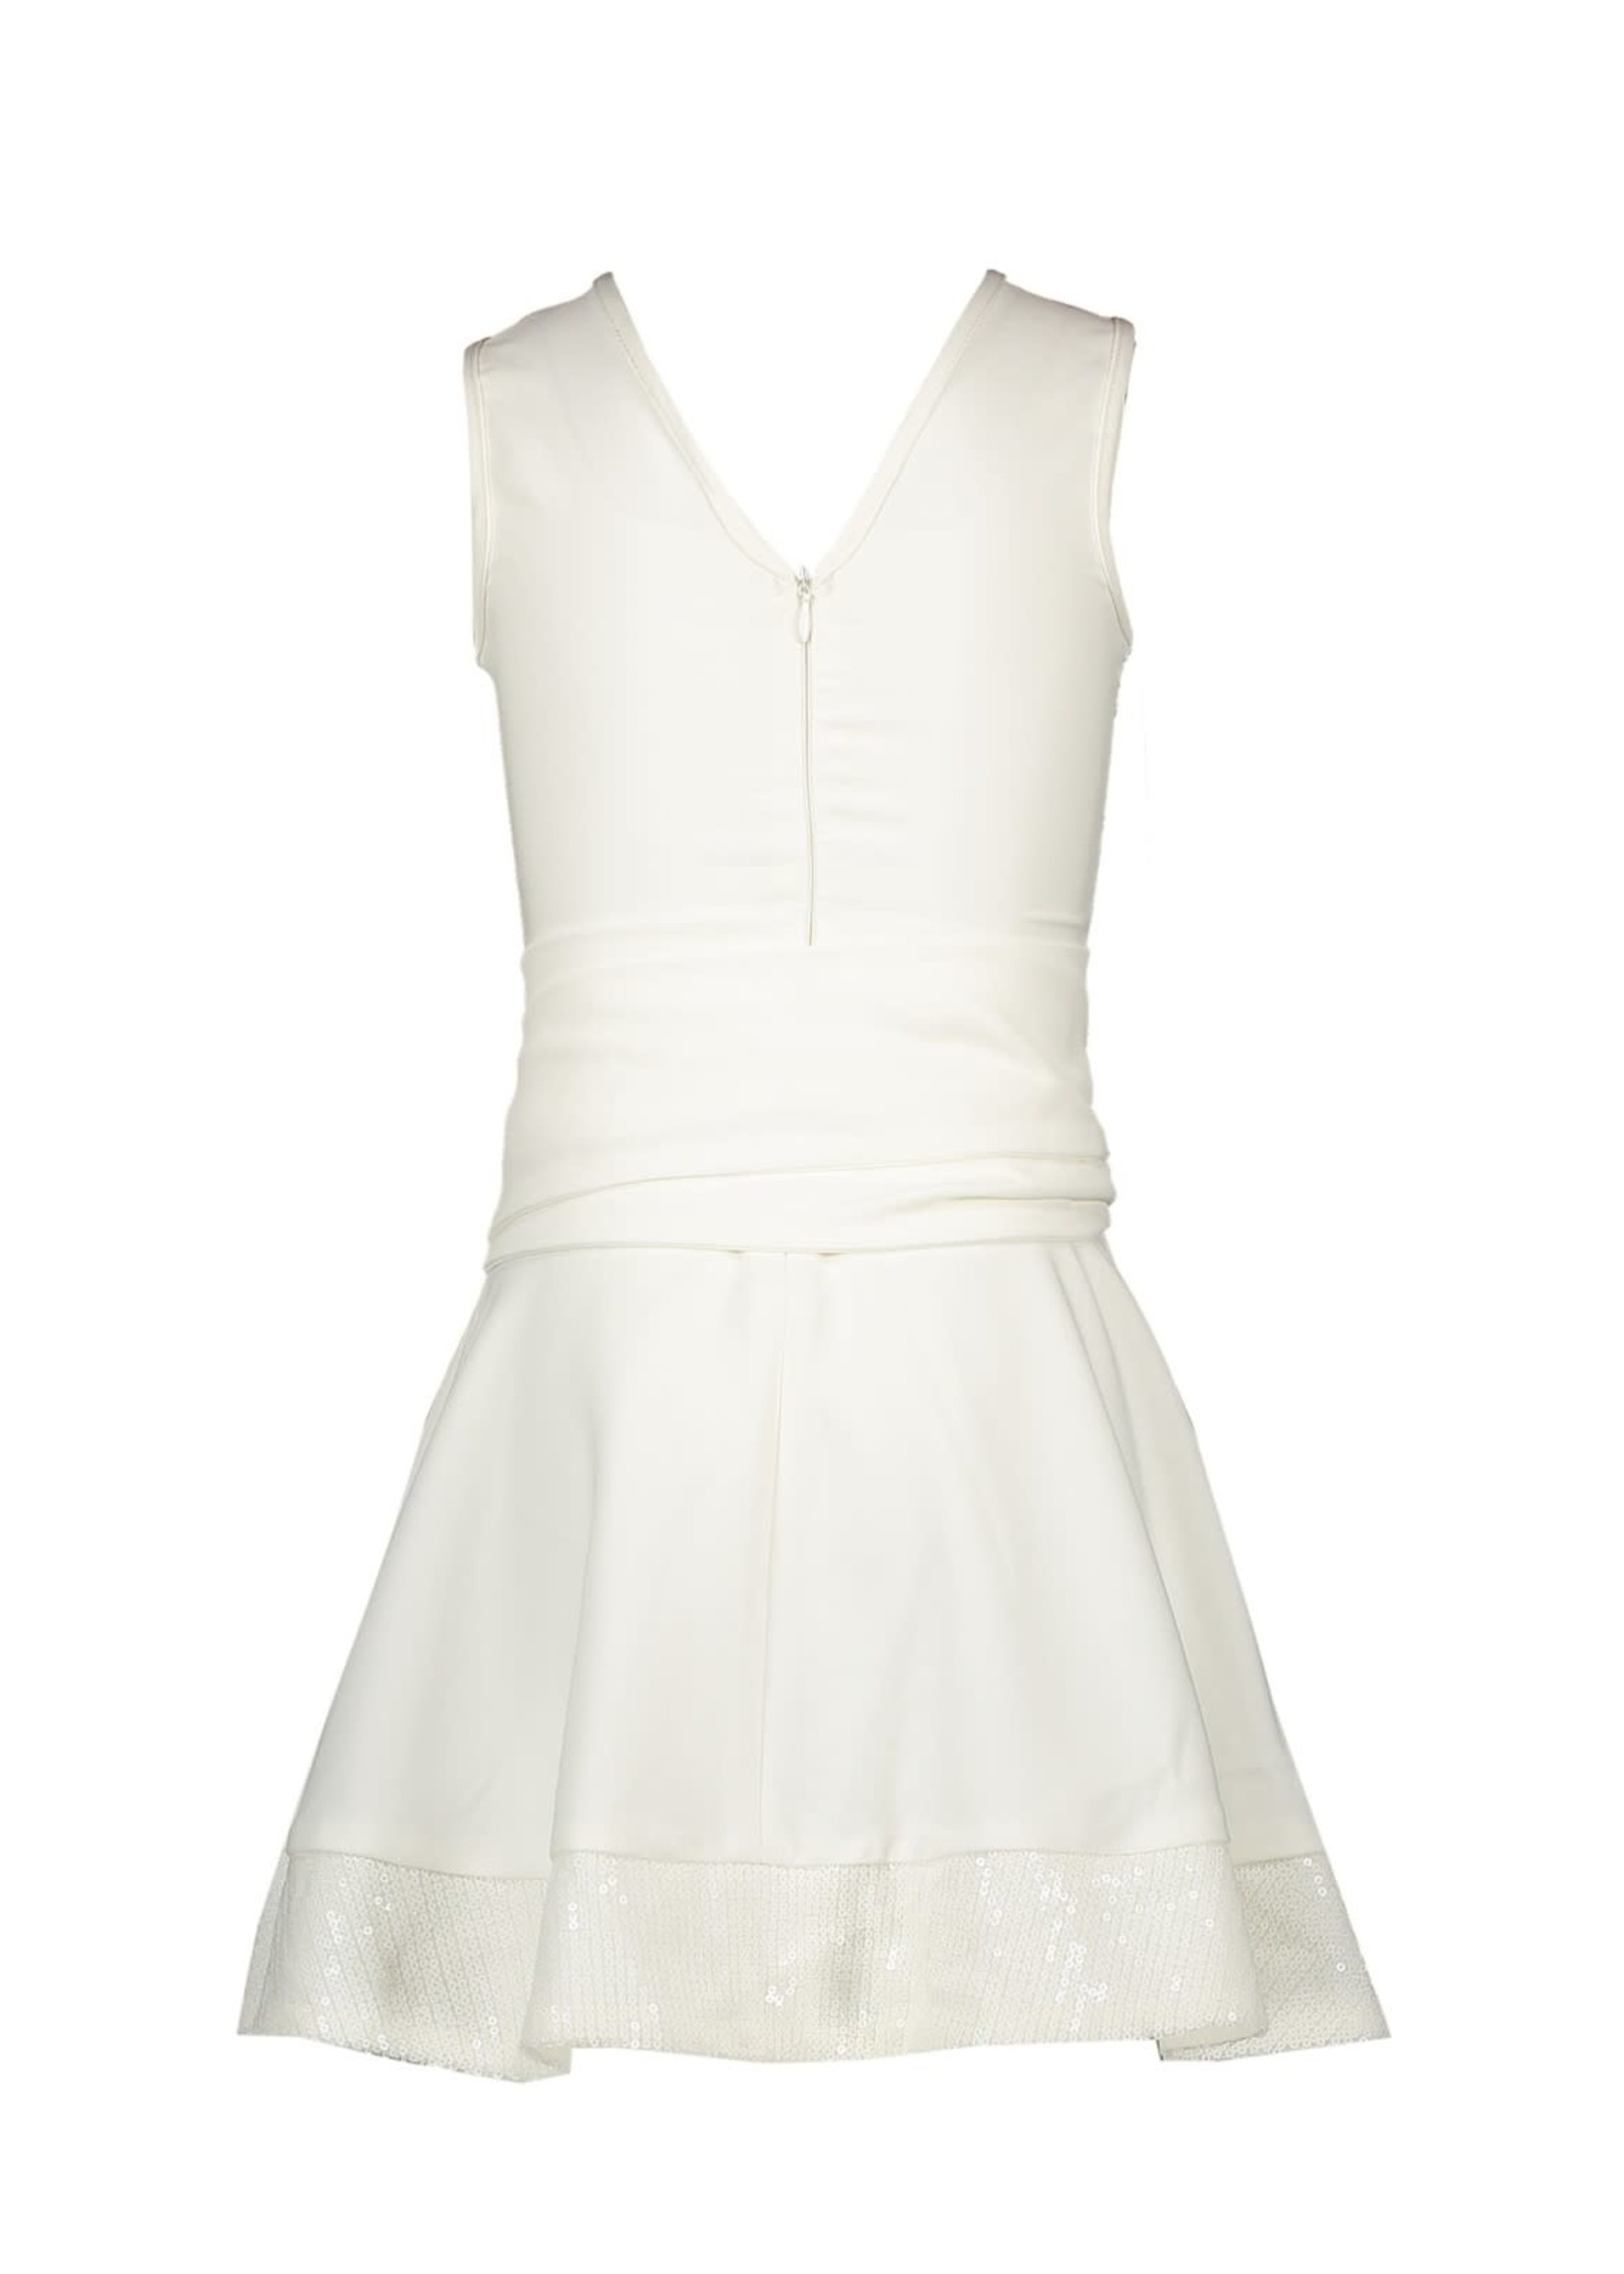 Le Chic Le Chic dress sequin top & fabric belt C012-5806 Off White